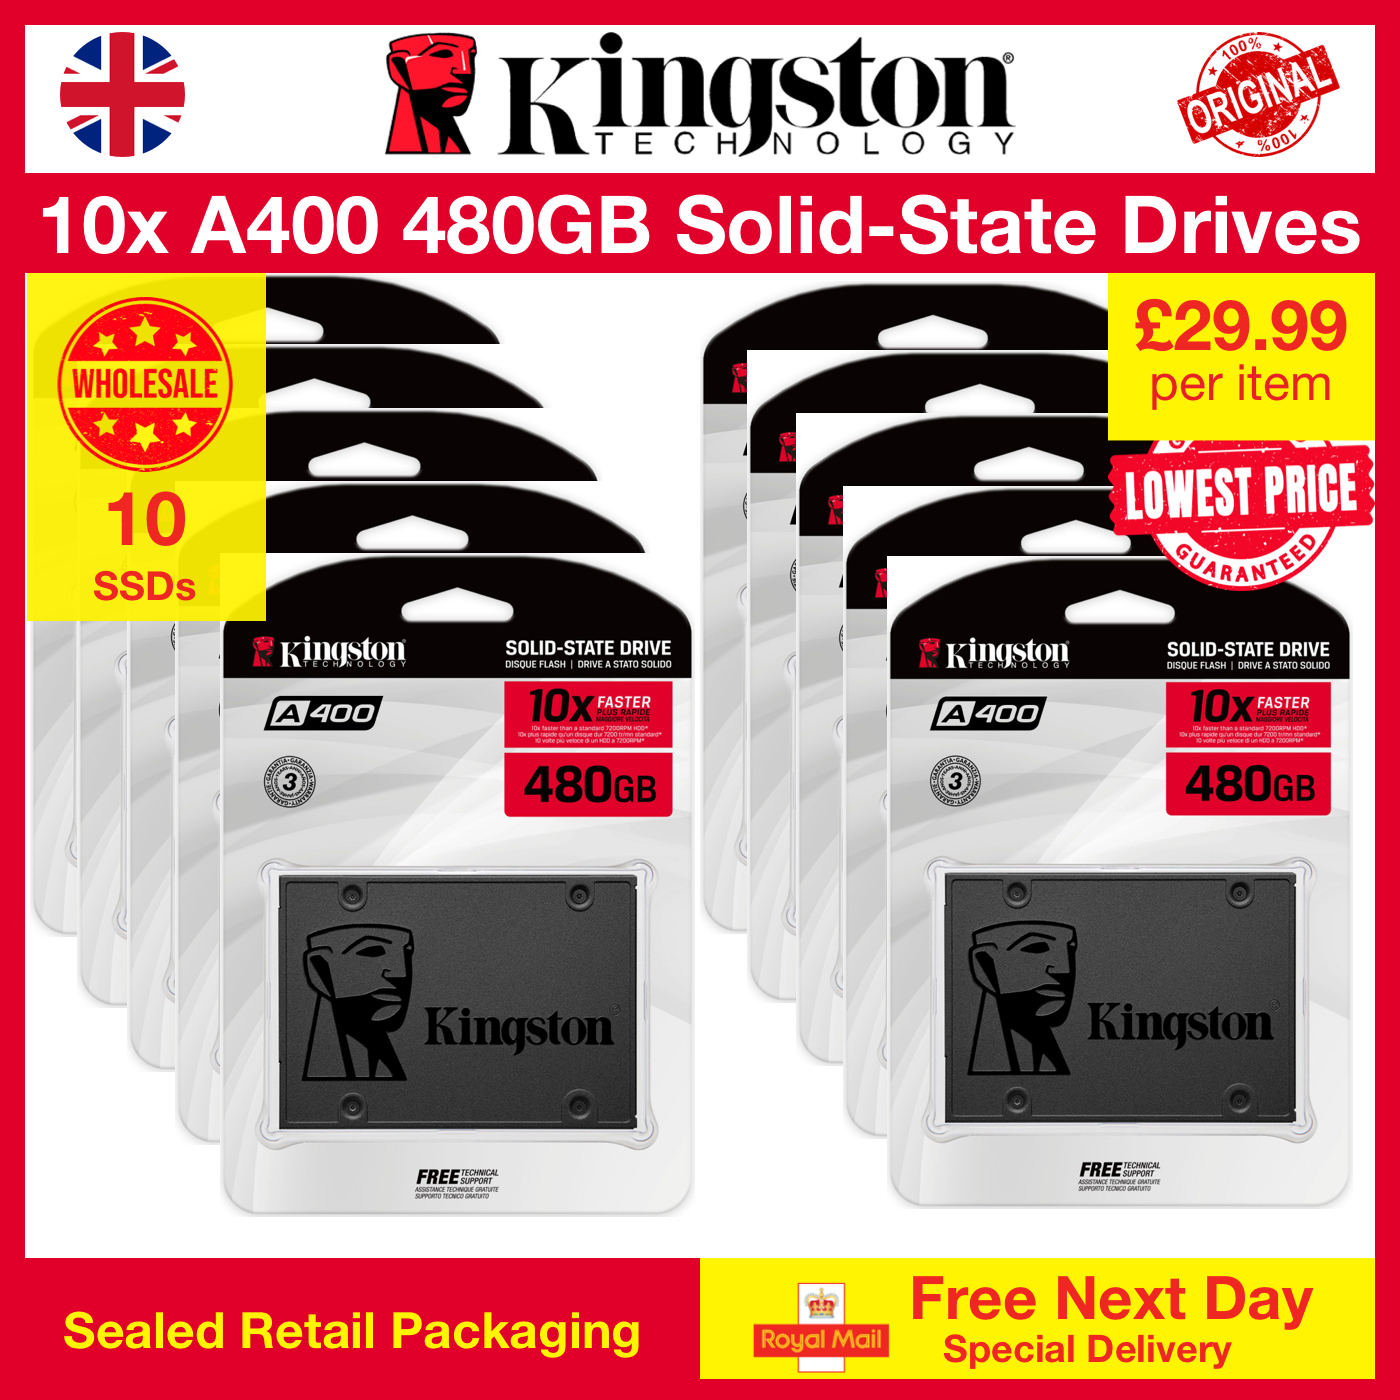 10x A400 960GB SSD Wholesale